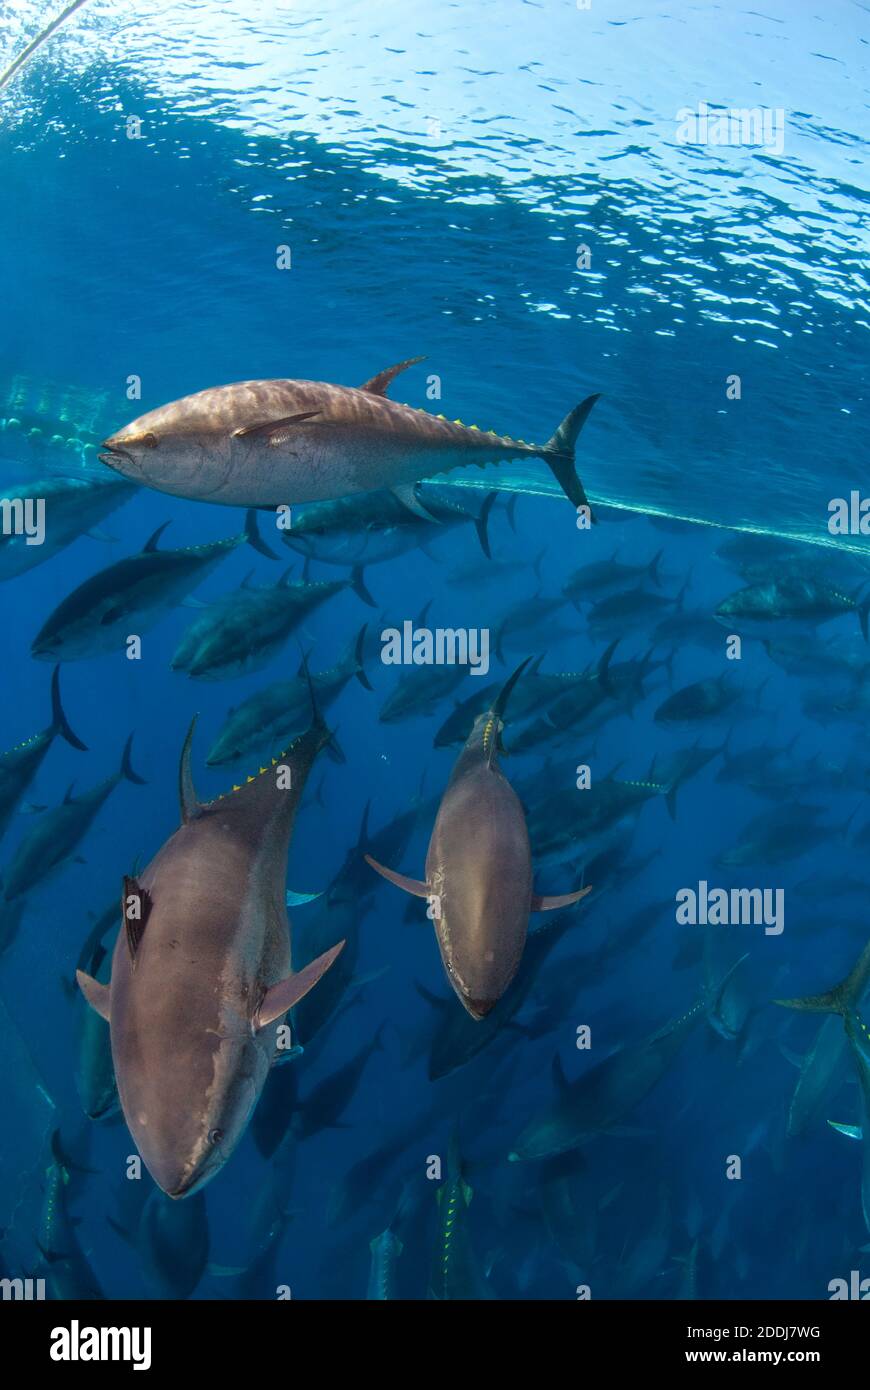 https://c8.alamy.com/comp/2DDJ7WG/atlantic-bluefin-tuna-fished-in-seine-fishing-net-mediterranean-sea-2DDJ7WG.jpg